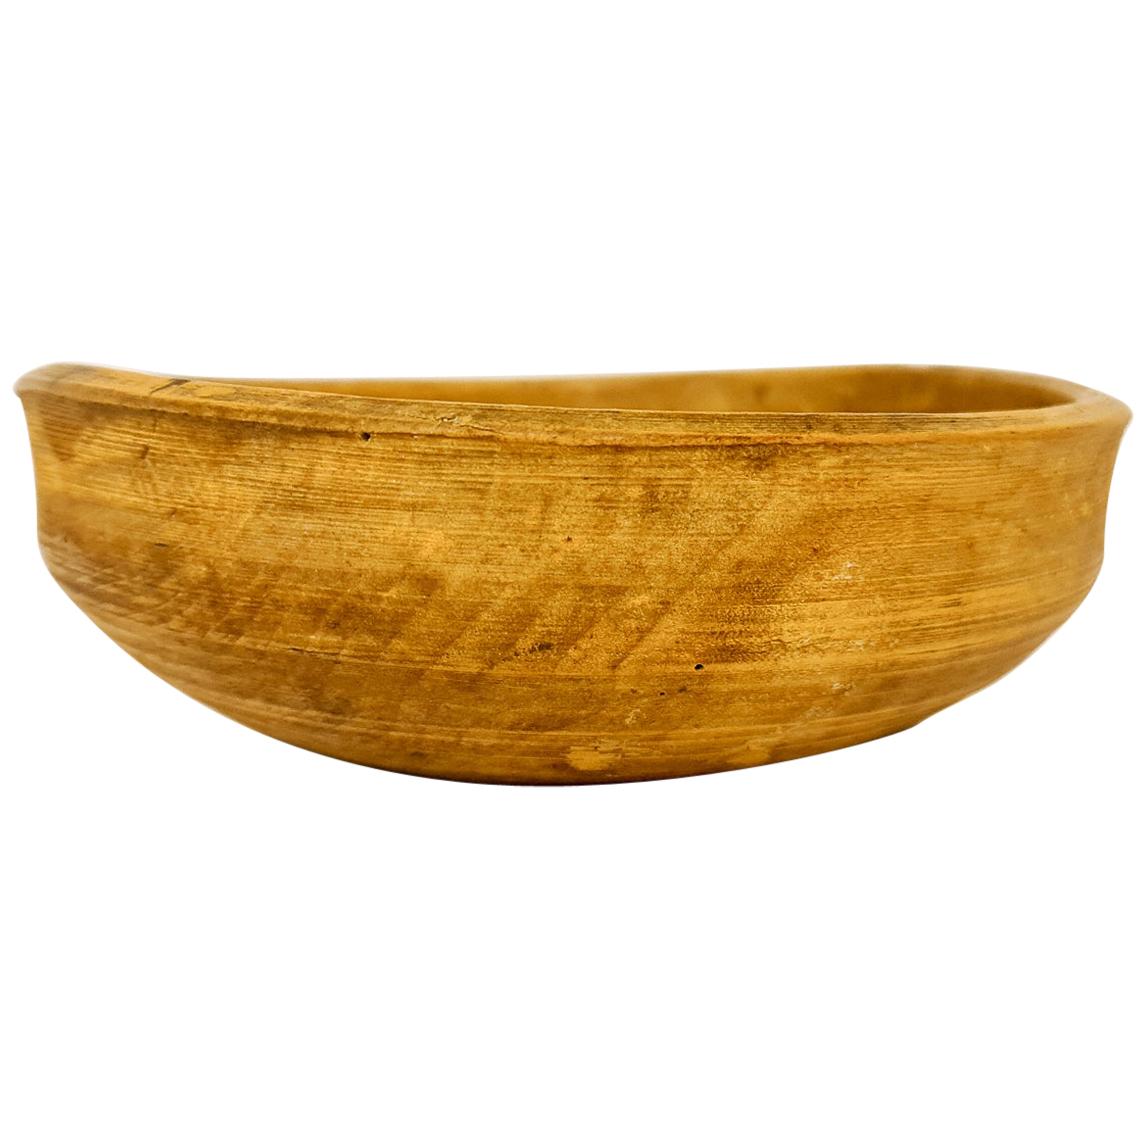 Swedish Folk Art, Unique 19th Century Wooden Bowl